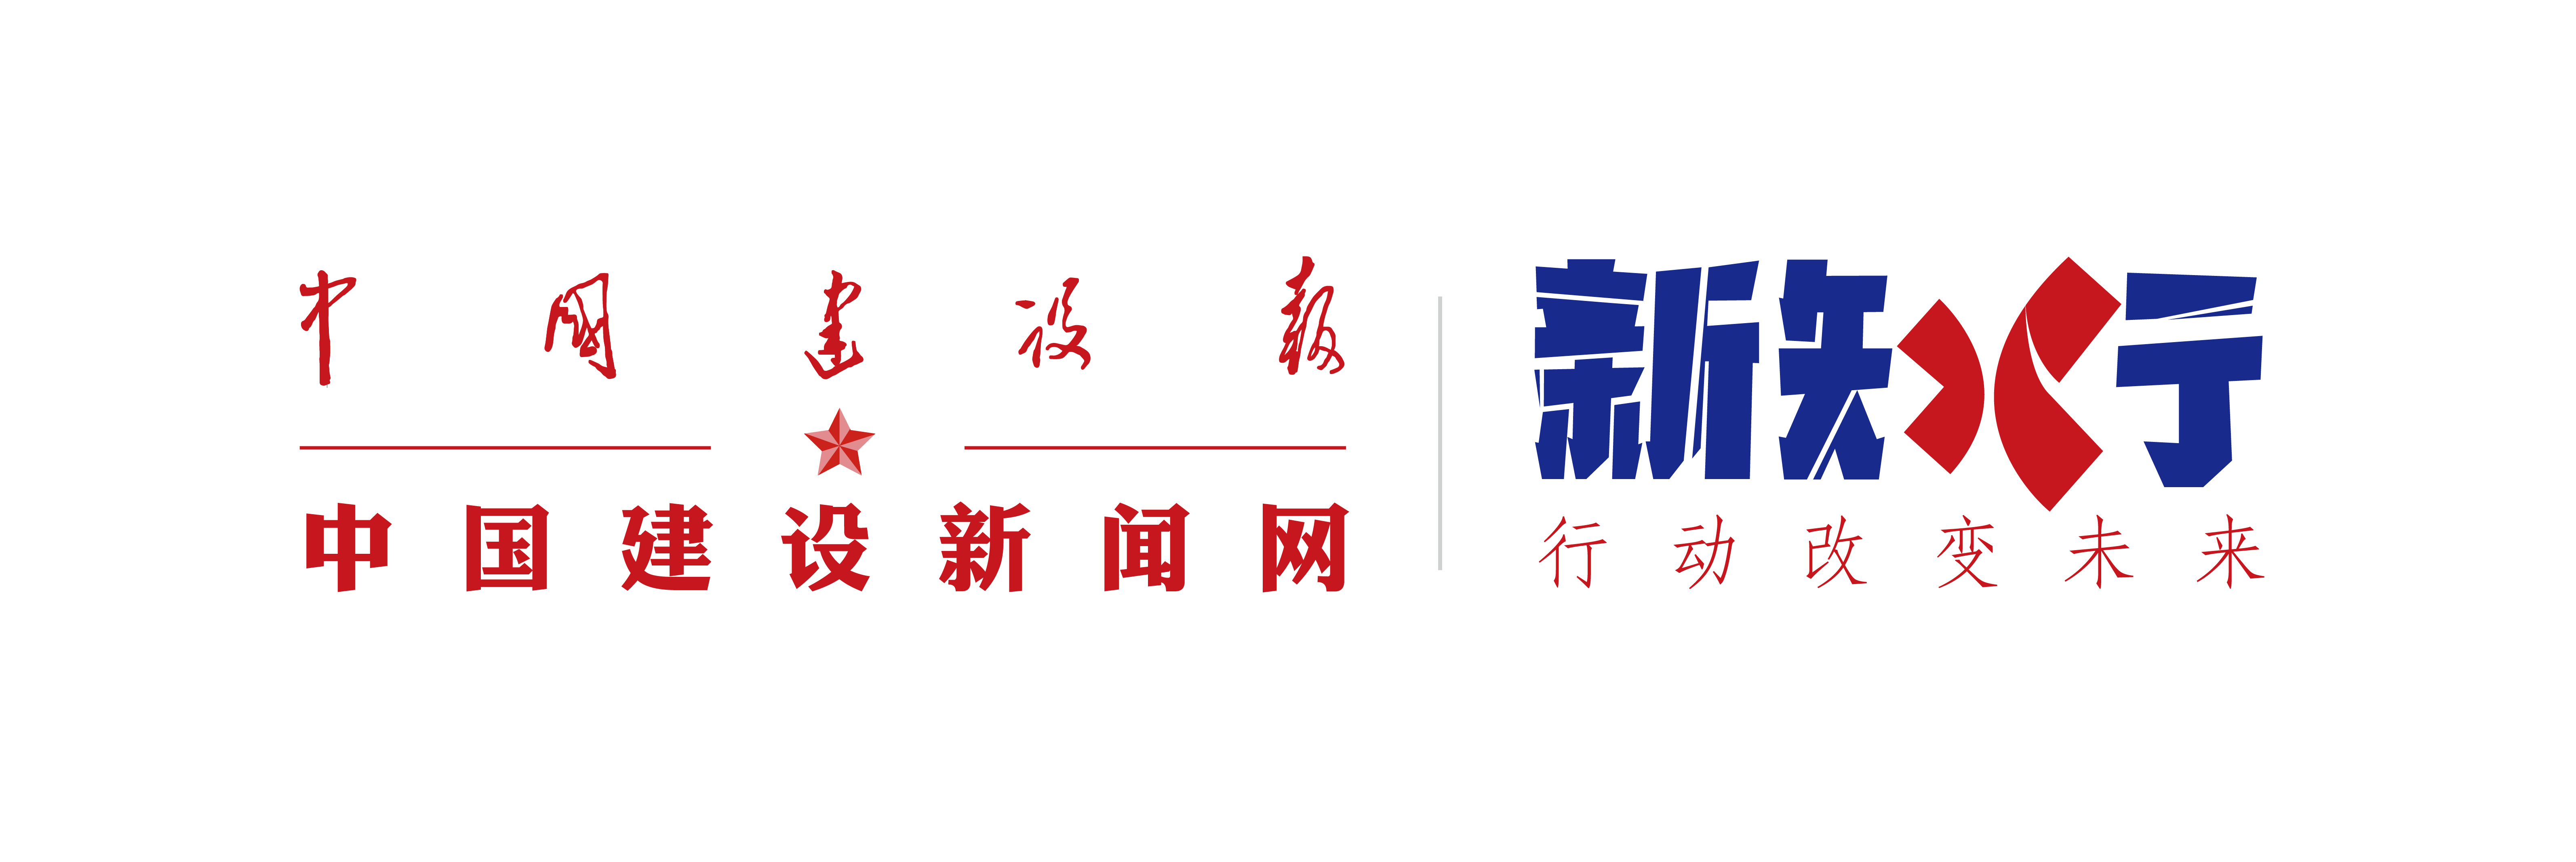 新知行logo设计_画板 1.png